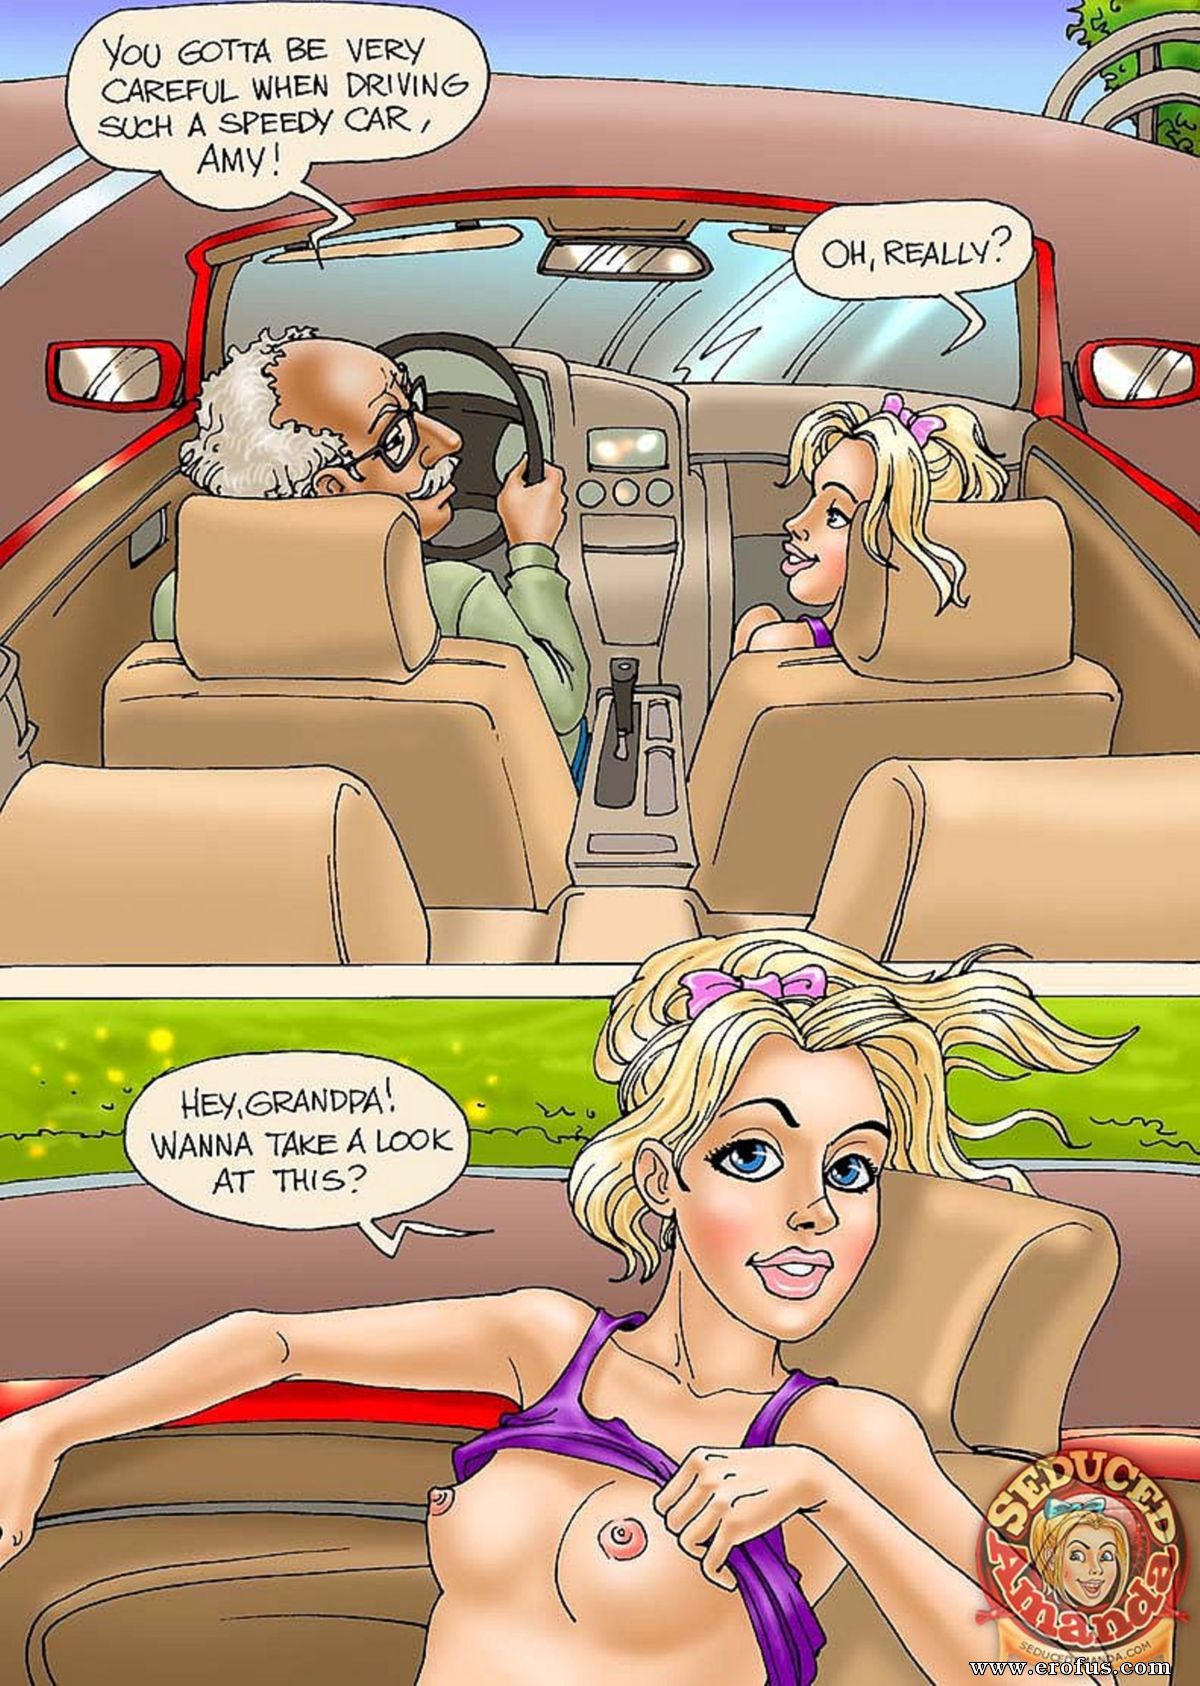 Grandpa Car - Page 4 | seduced-amanda-comics/grandpa-and-his-new-ride ...